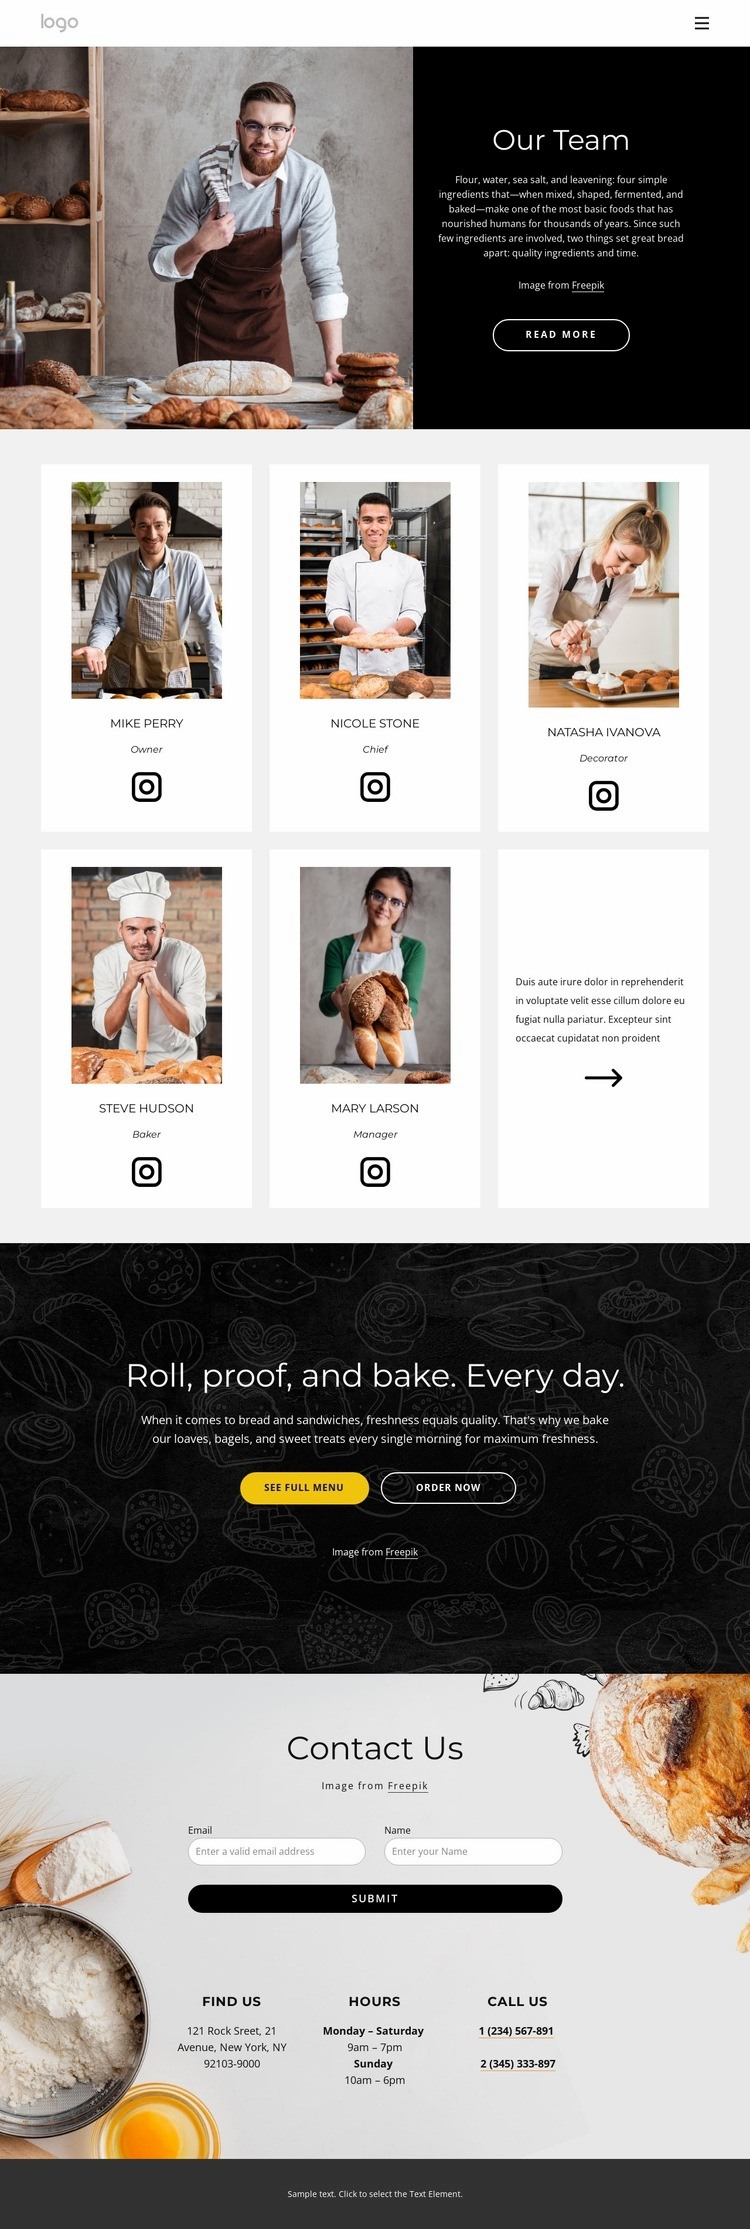 Bread bakers Homepage Design